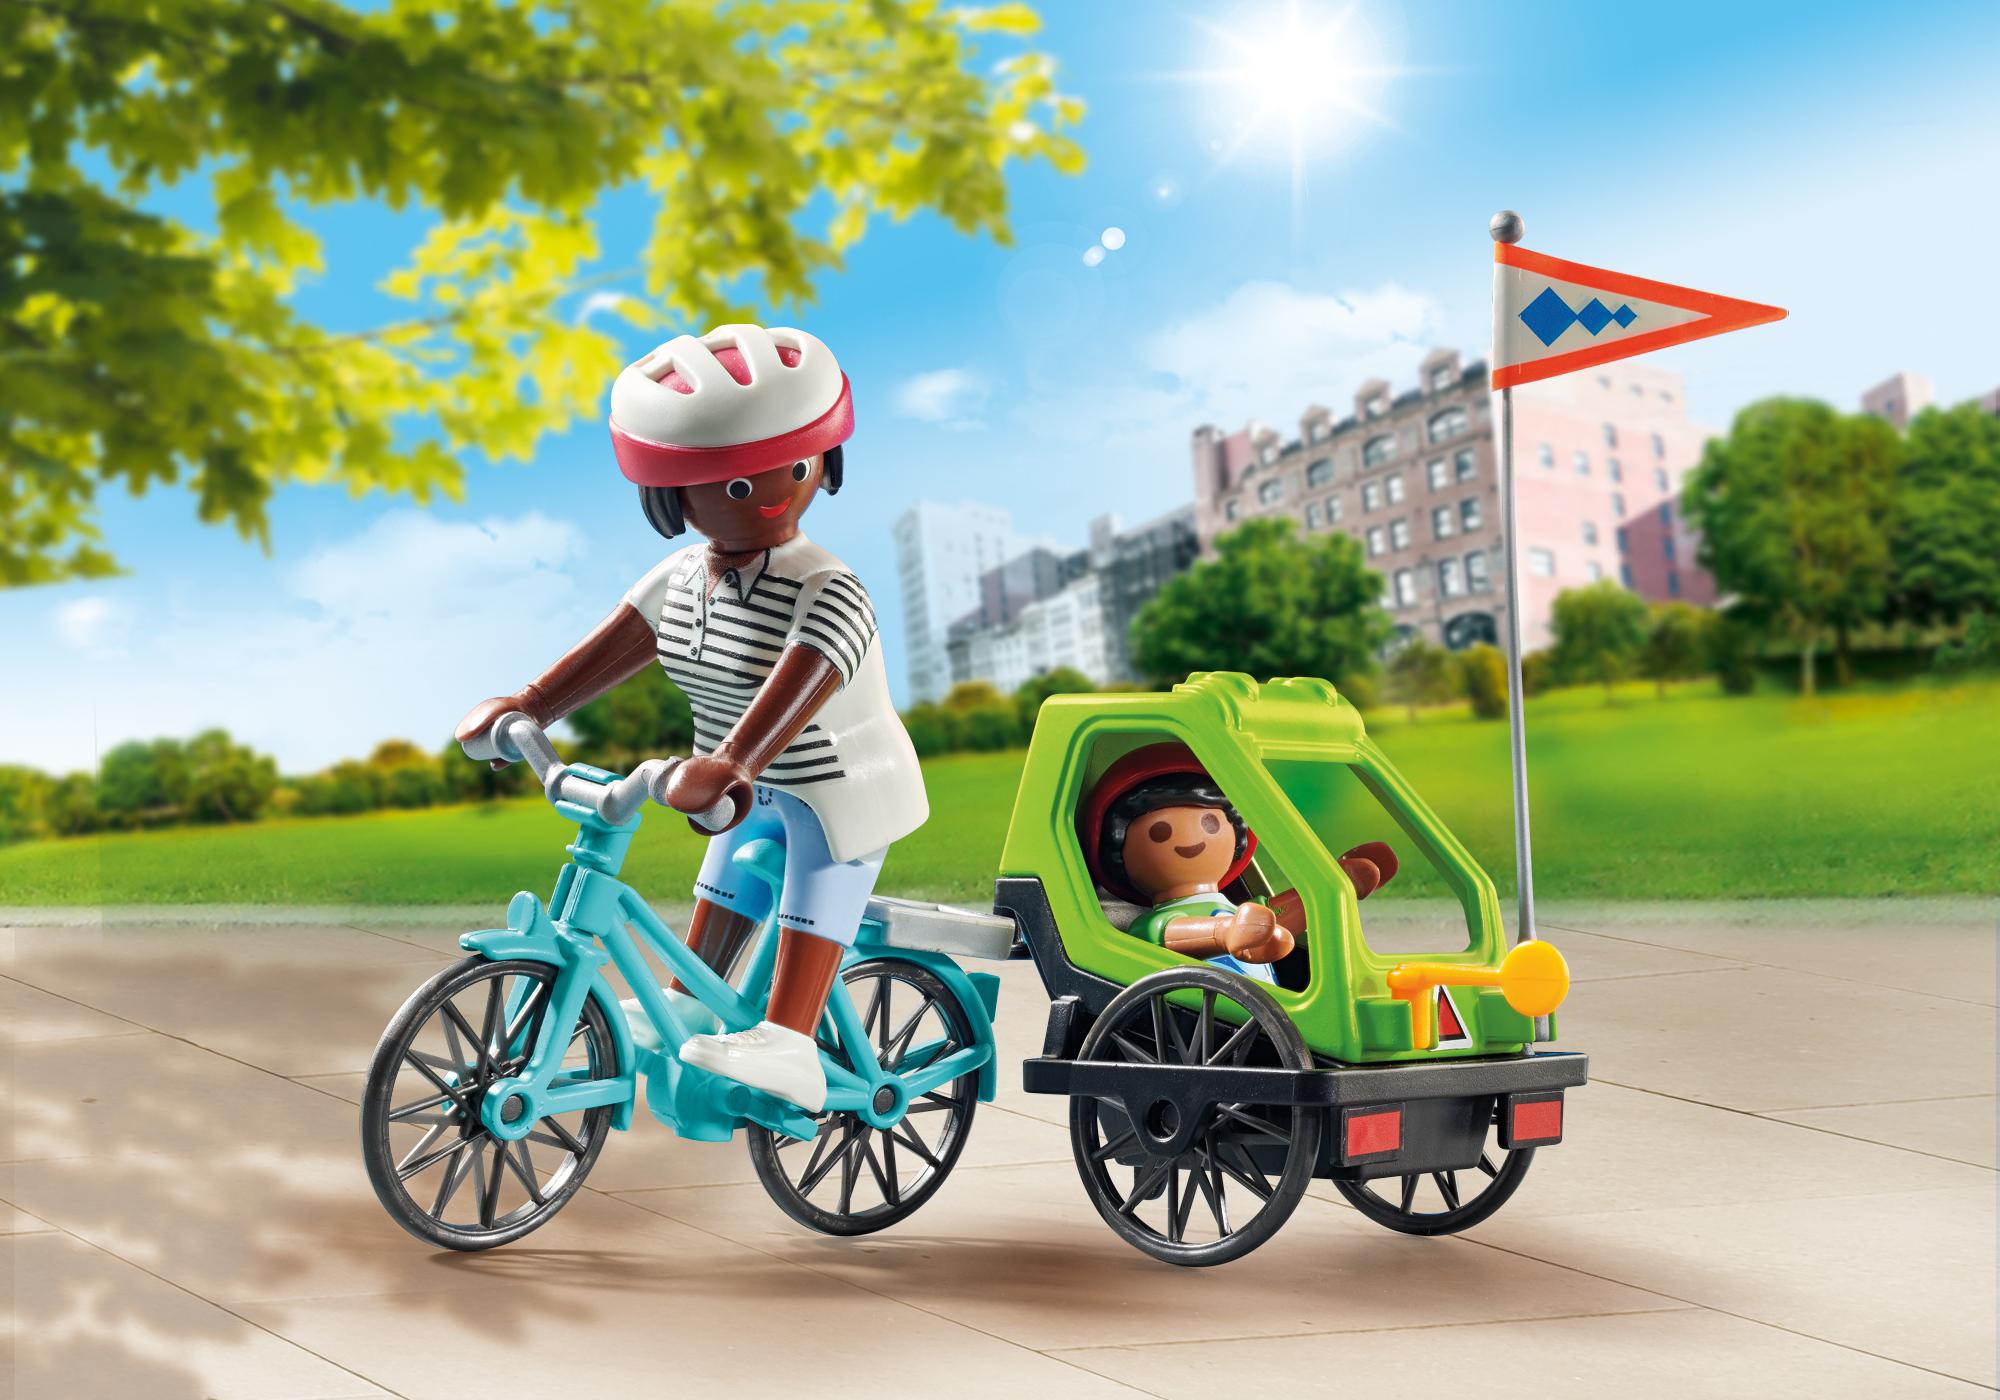 Cyclistes maman et enfant - 70601